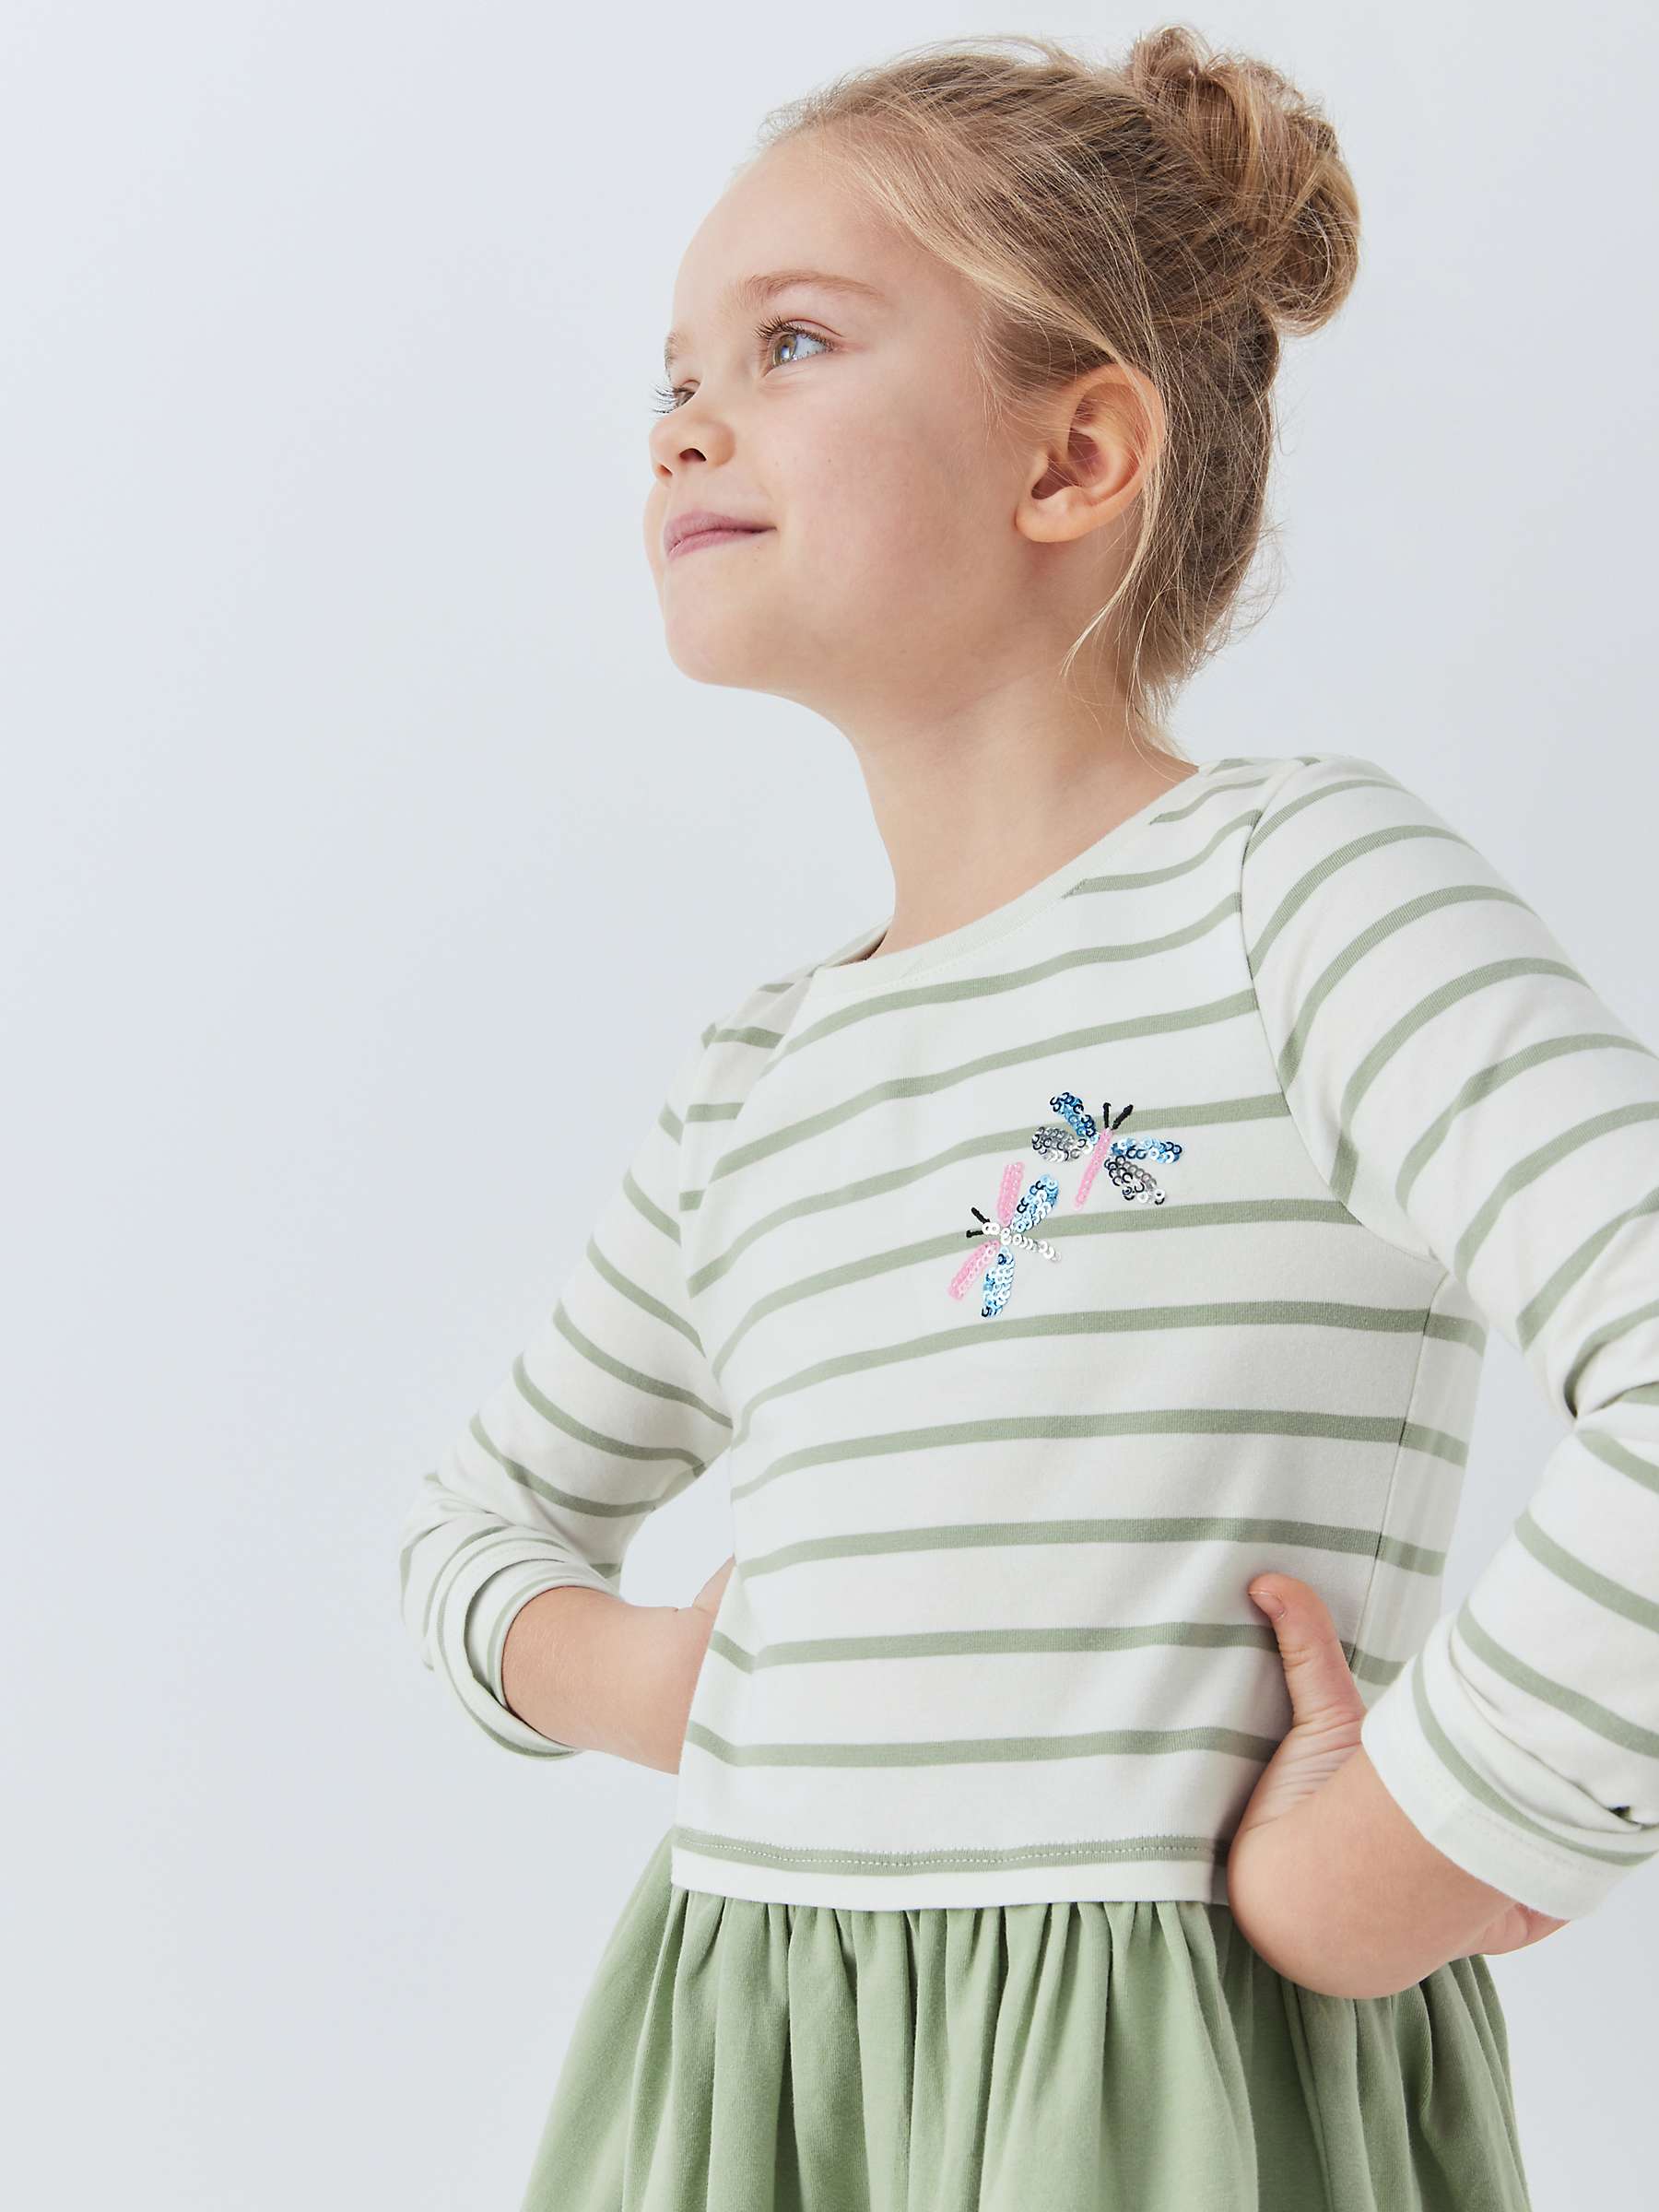 Buy John Lewis Kids' Half Stripe Pleated Dress, Desert Sage/Gardenia Online at johnlewis.com